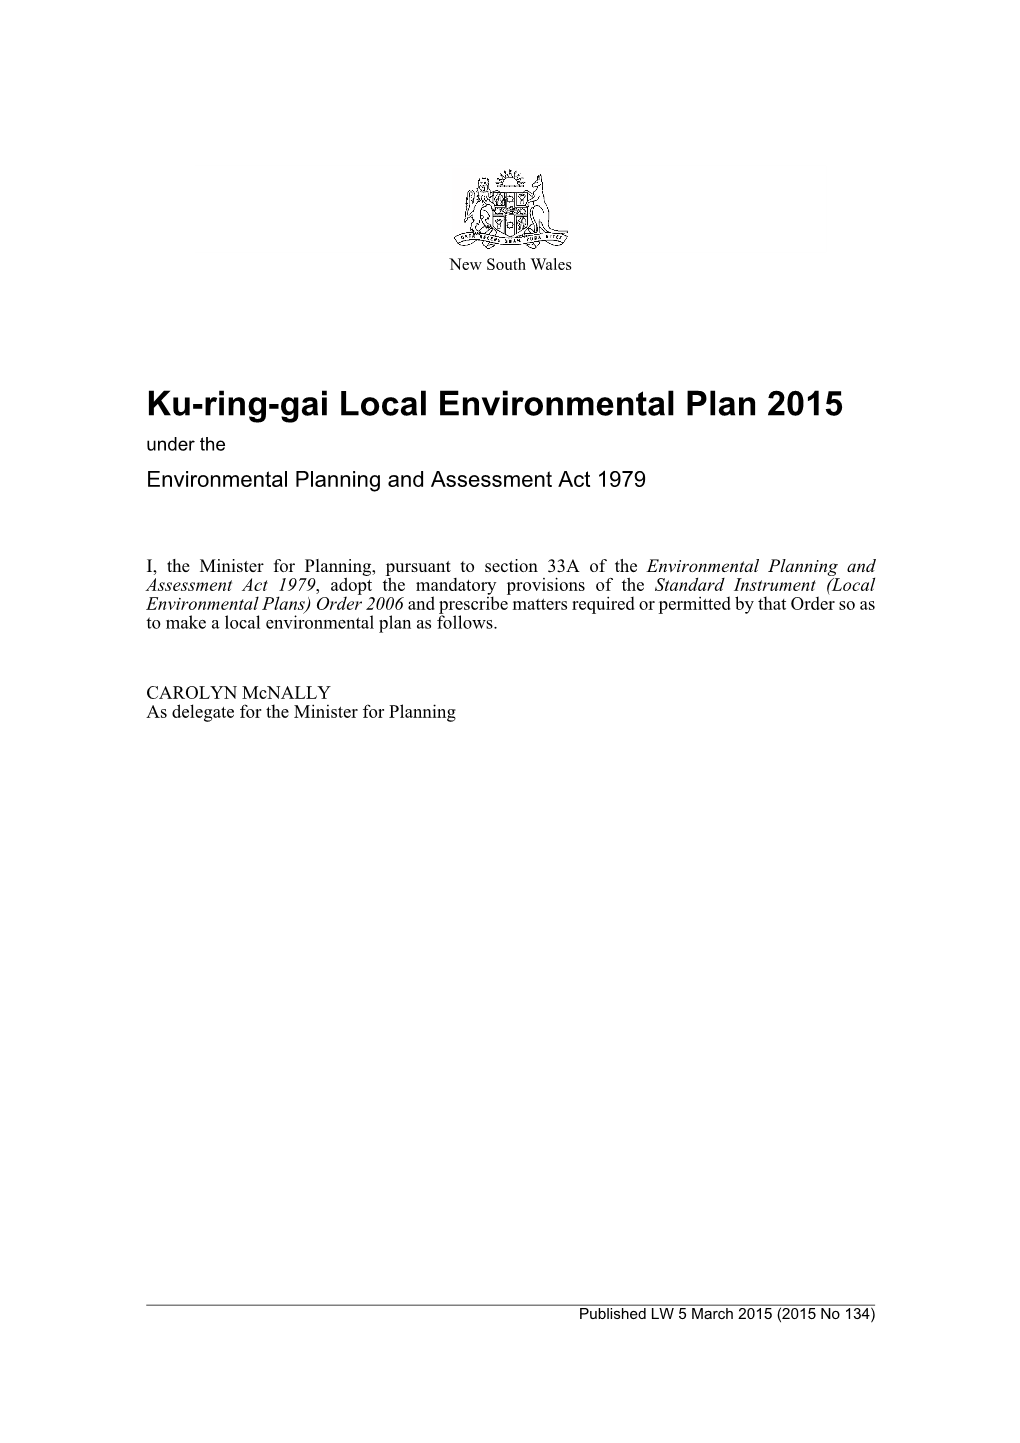 Ku-Ring-Gai Local Environmental Plan 2015 Under the Environmental Planning and Assessment Act 1979